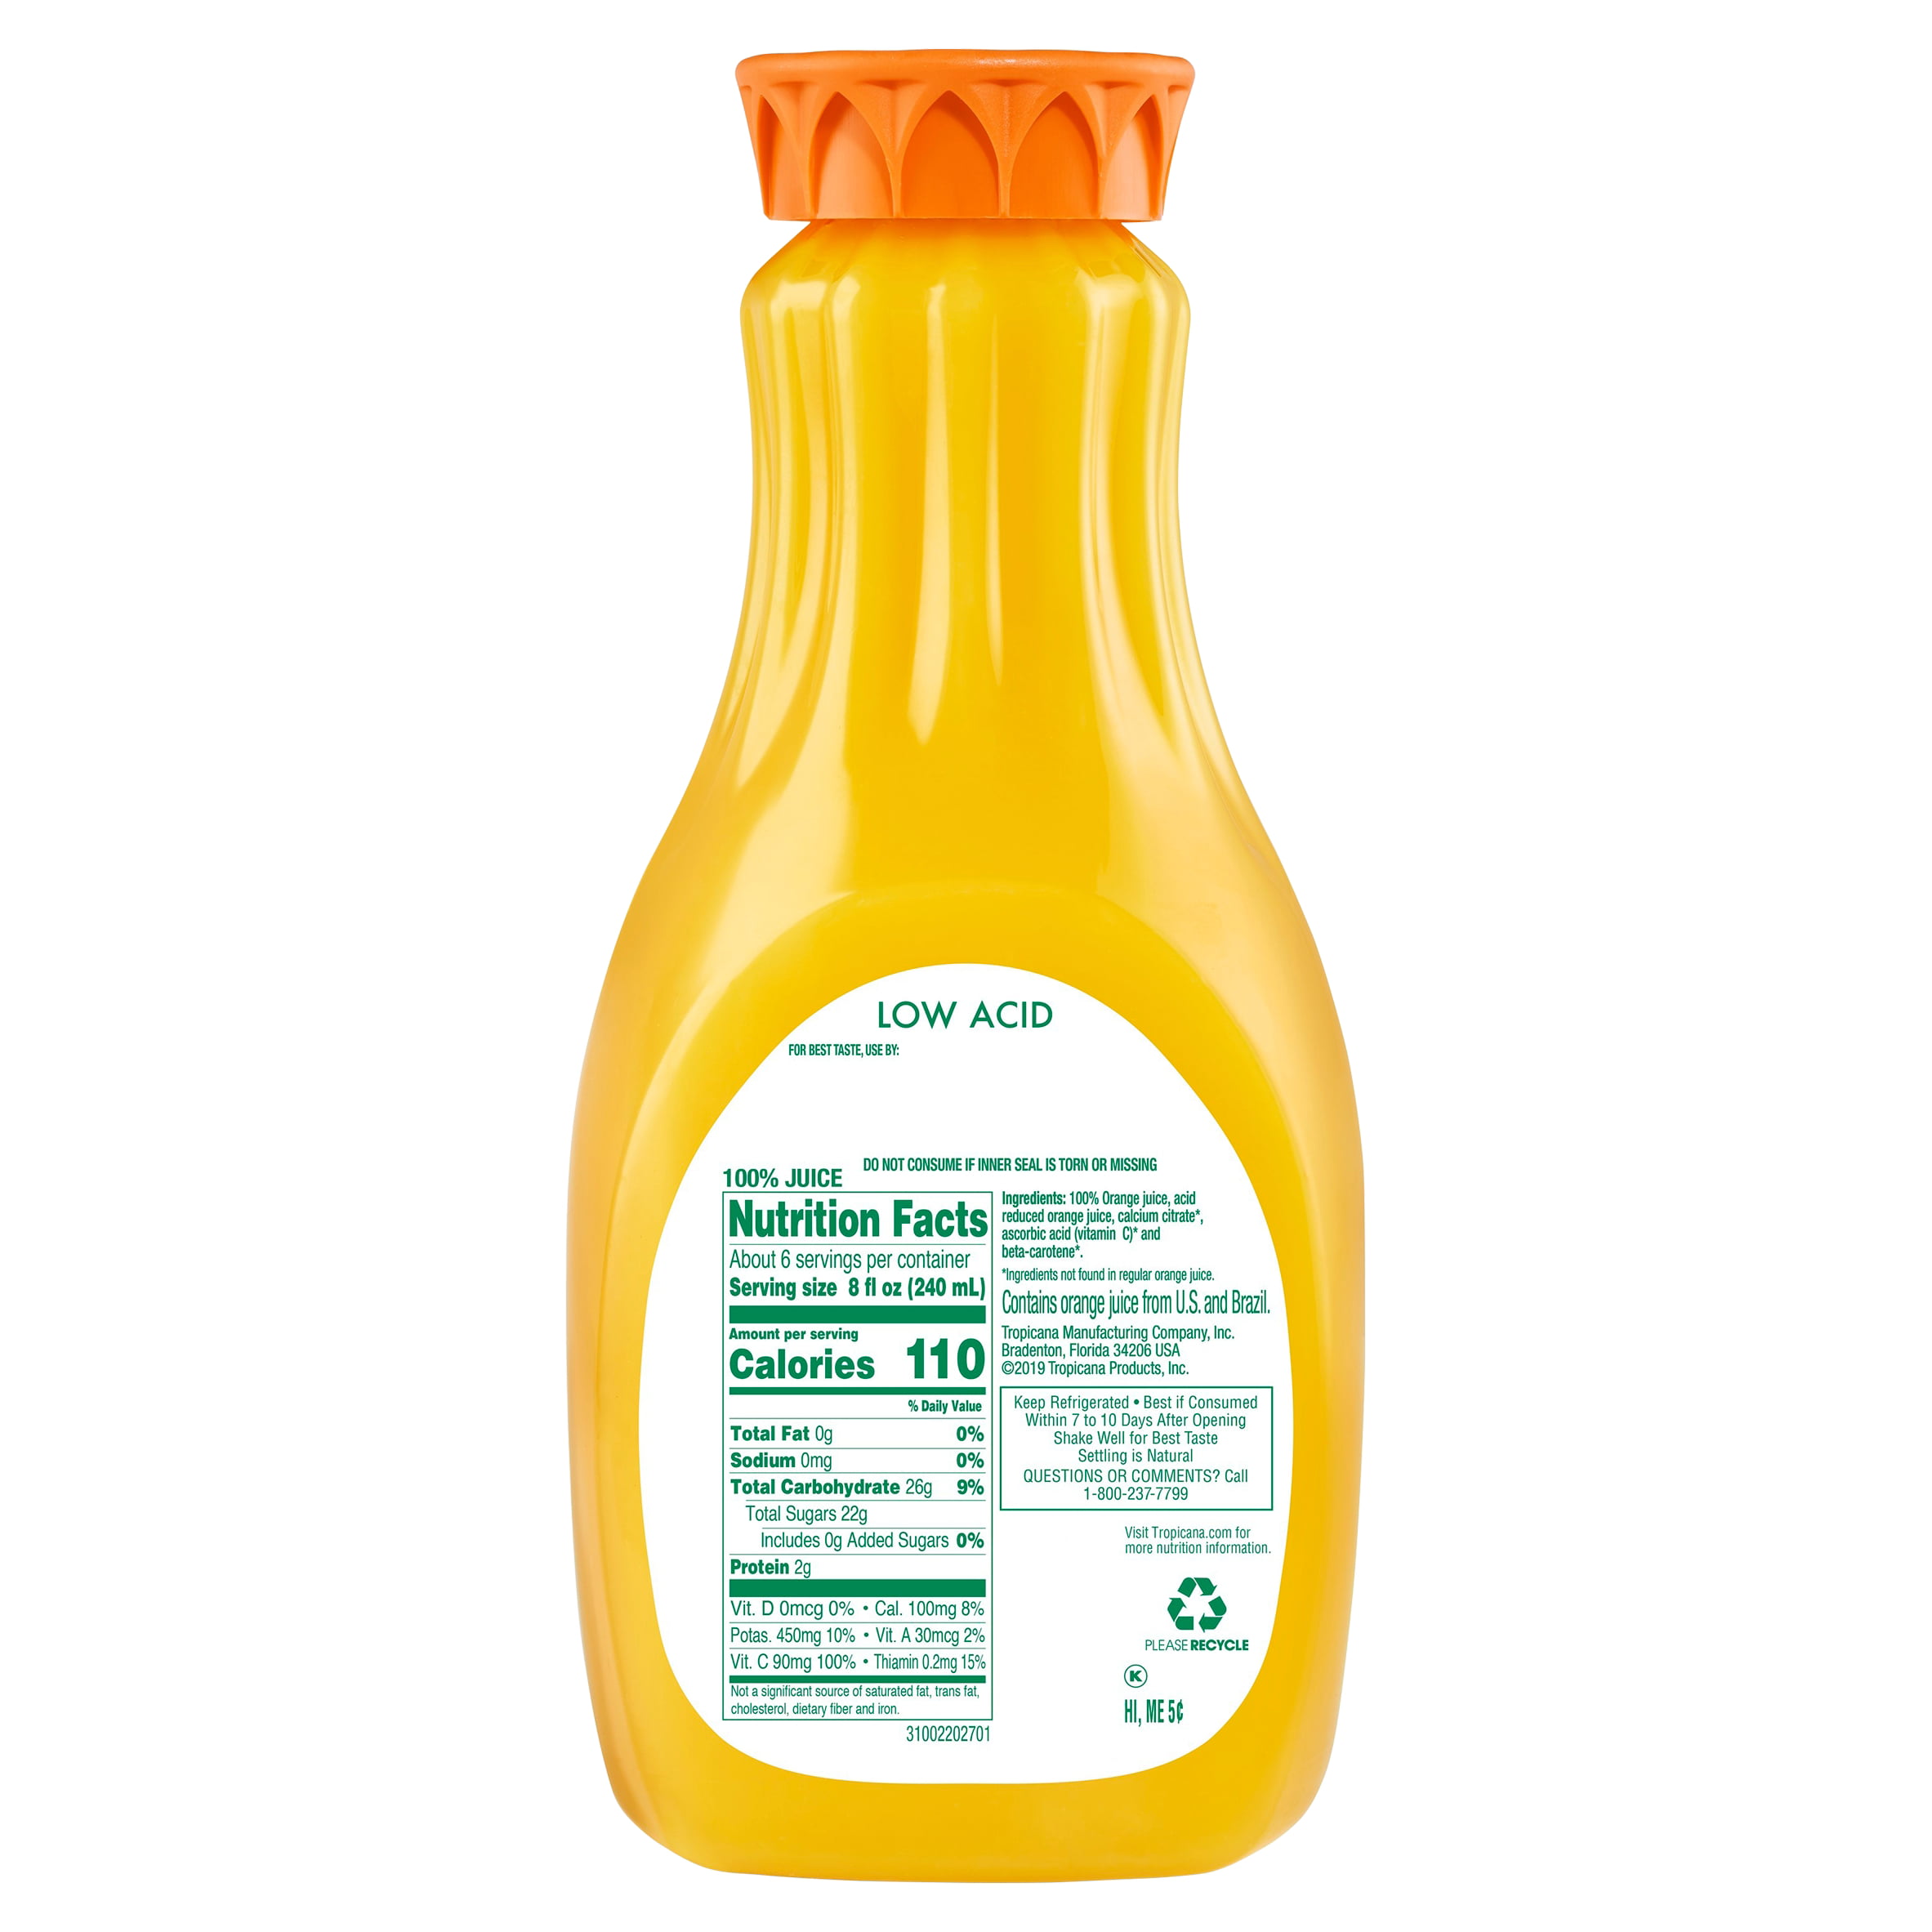 Tropicana Pure Premium Low Acid 100% Juice Orange No Pulp with Vitamins A and C 52 fl oz Bottle, Fruit Juice - image 5 of 9